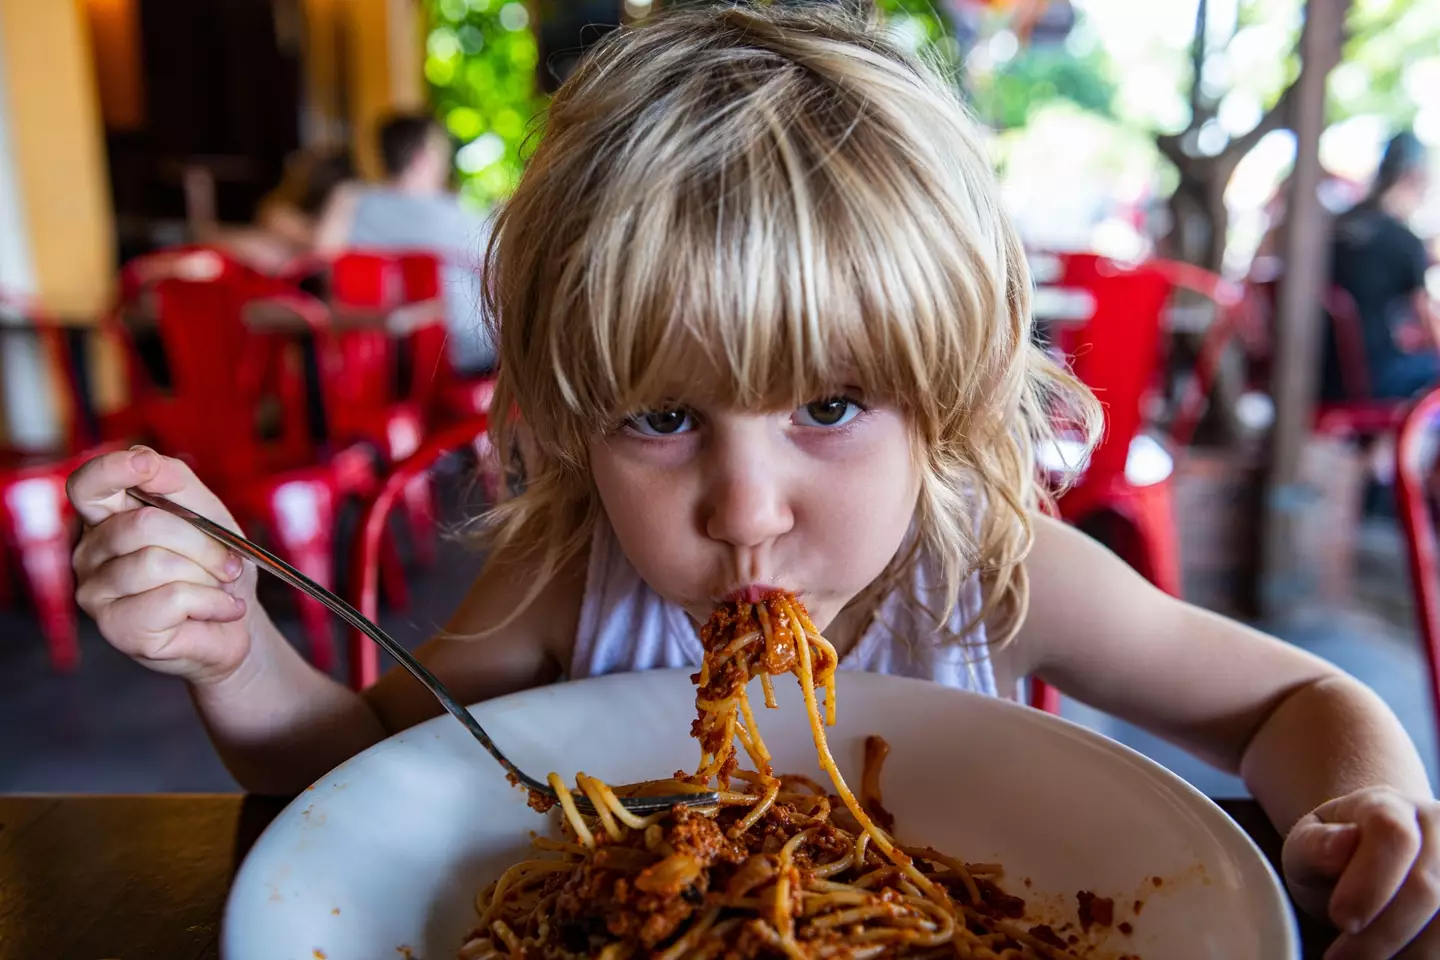 Stock image of child eating spaghetti in restaurant.